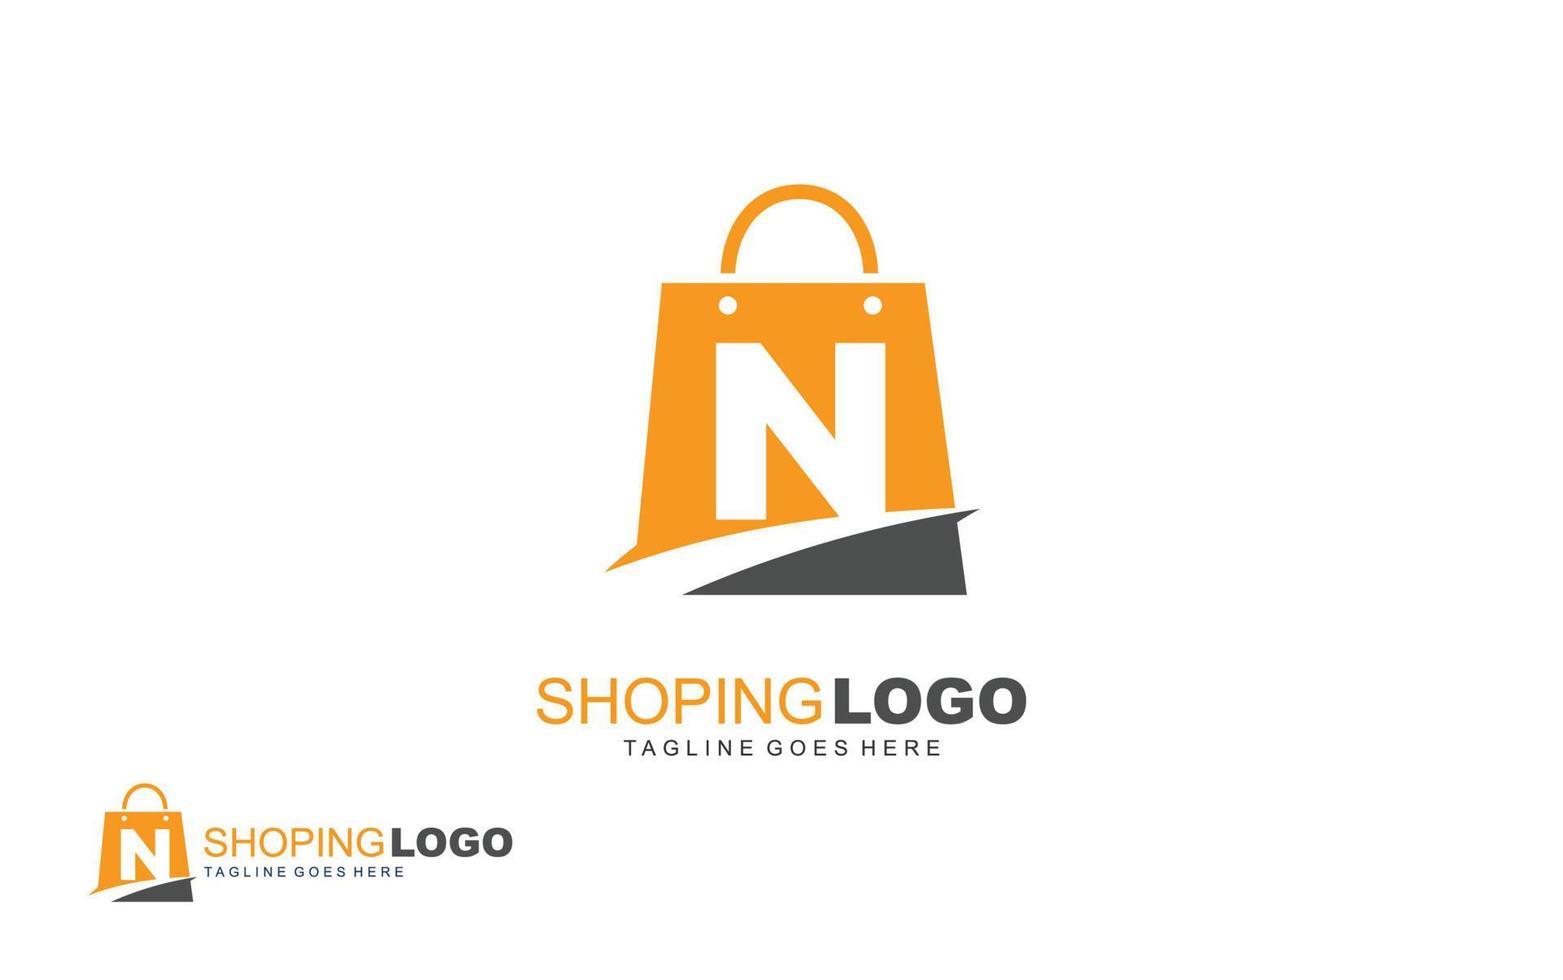 N logo ONLINESHOP for branding company. BAG template vector illustration for your brand.